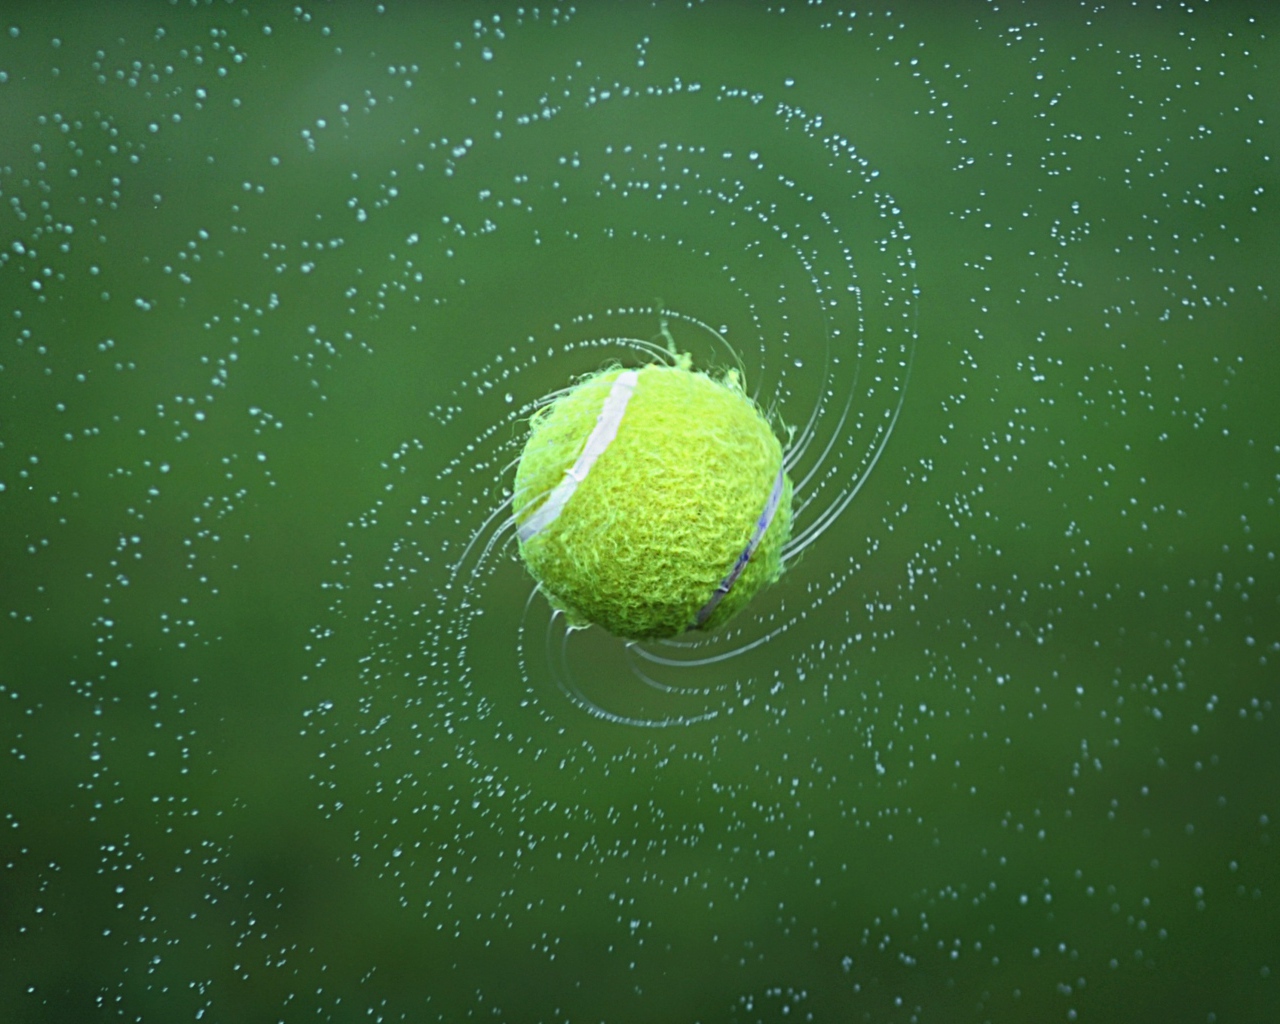 Tennis ball in splashing water on green background